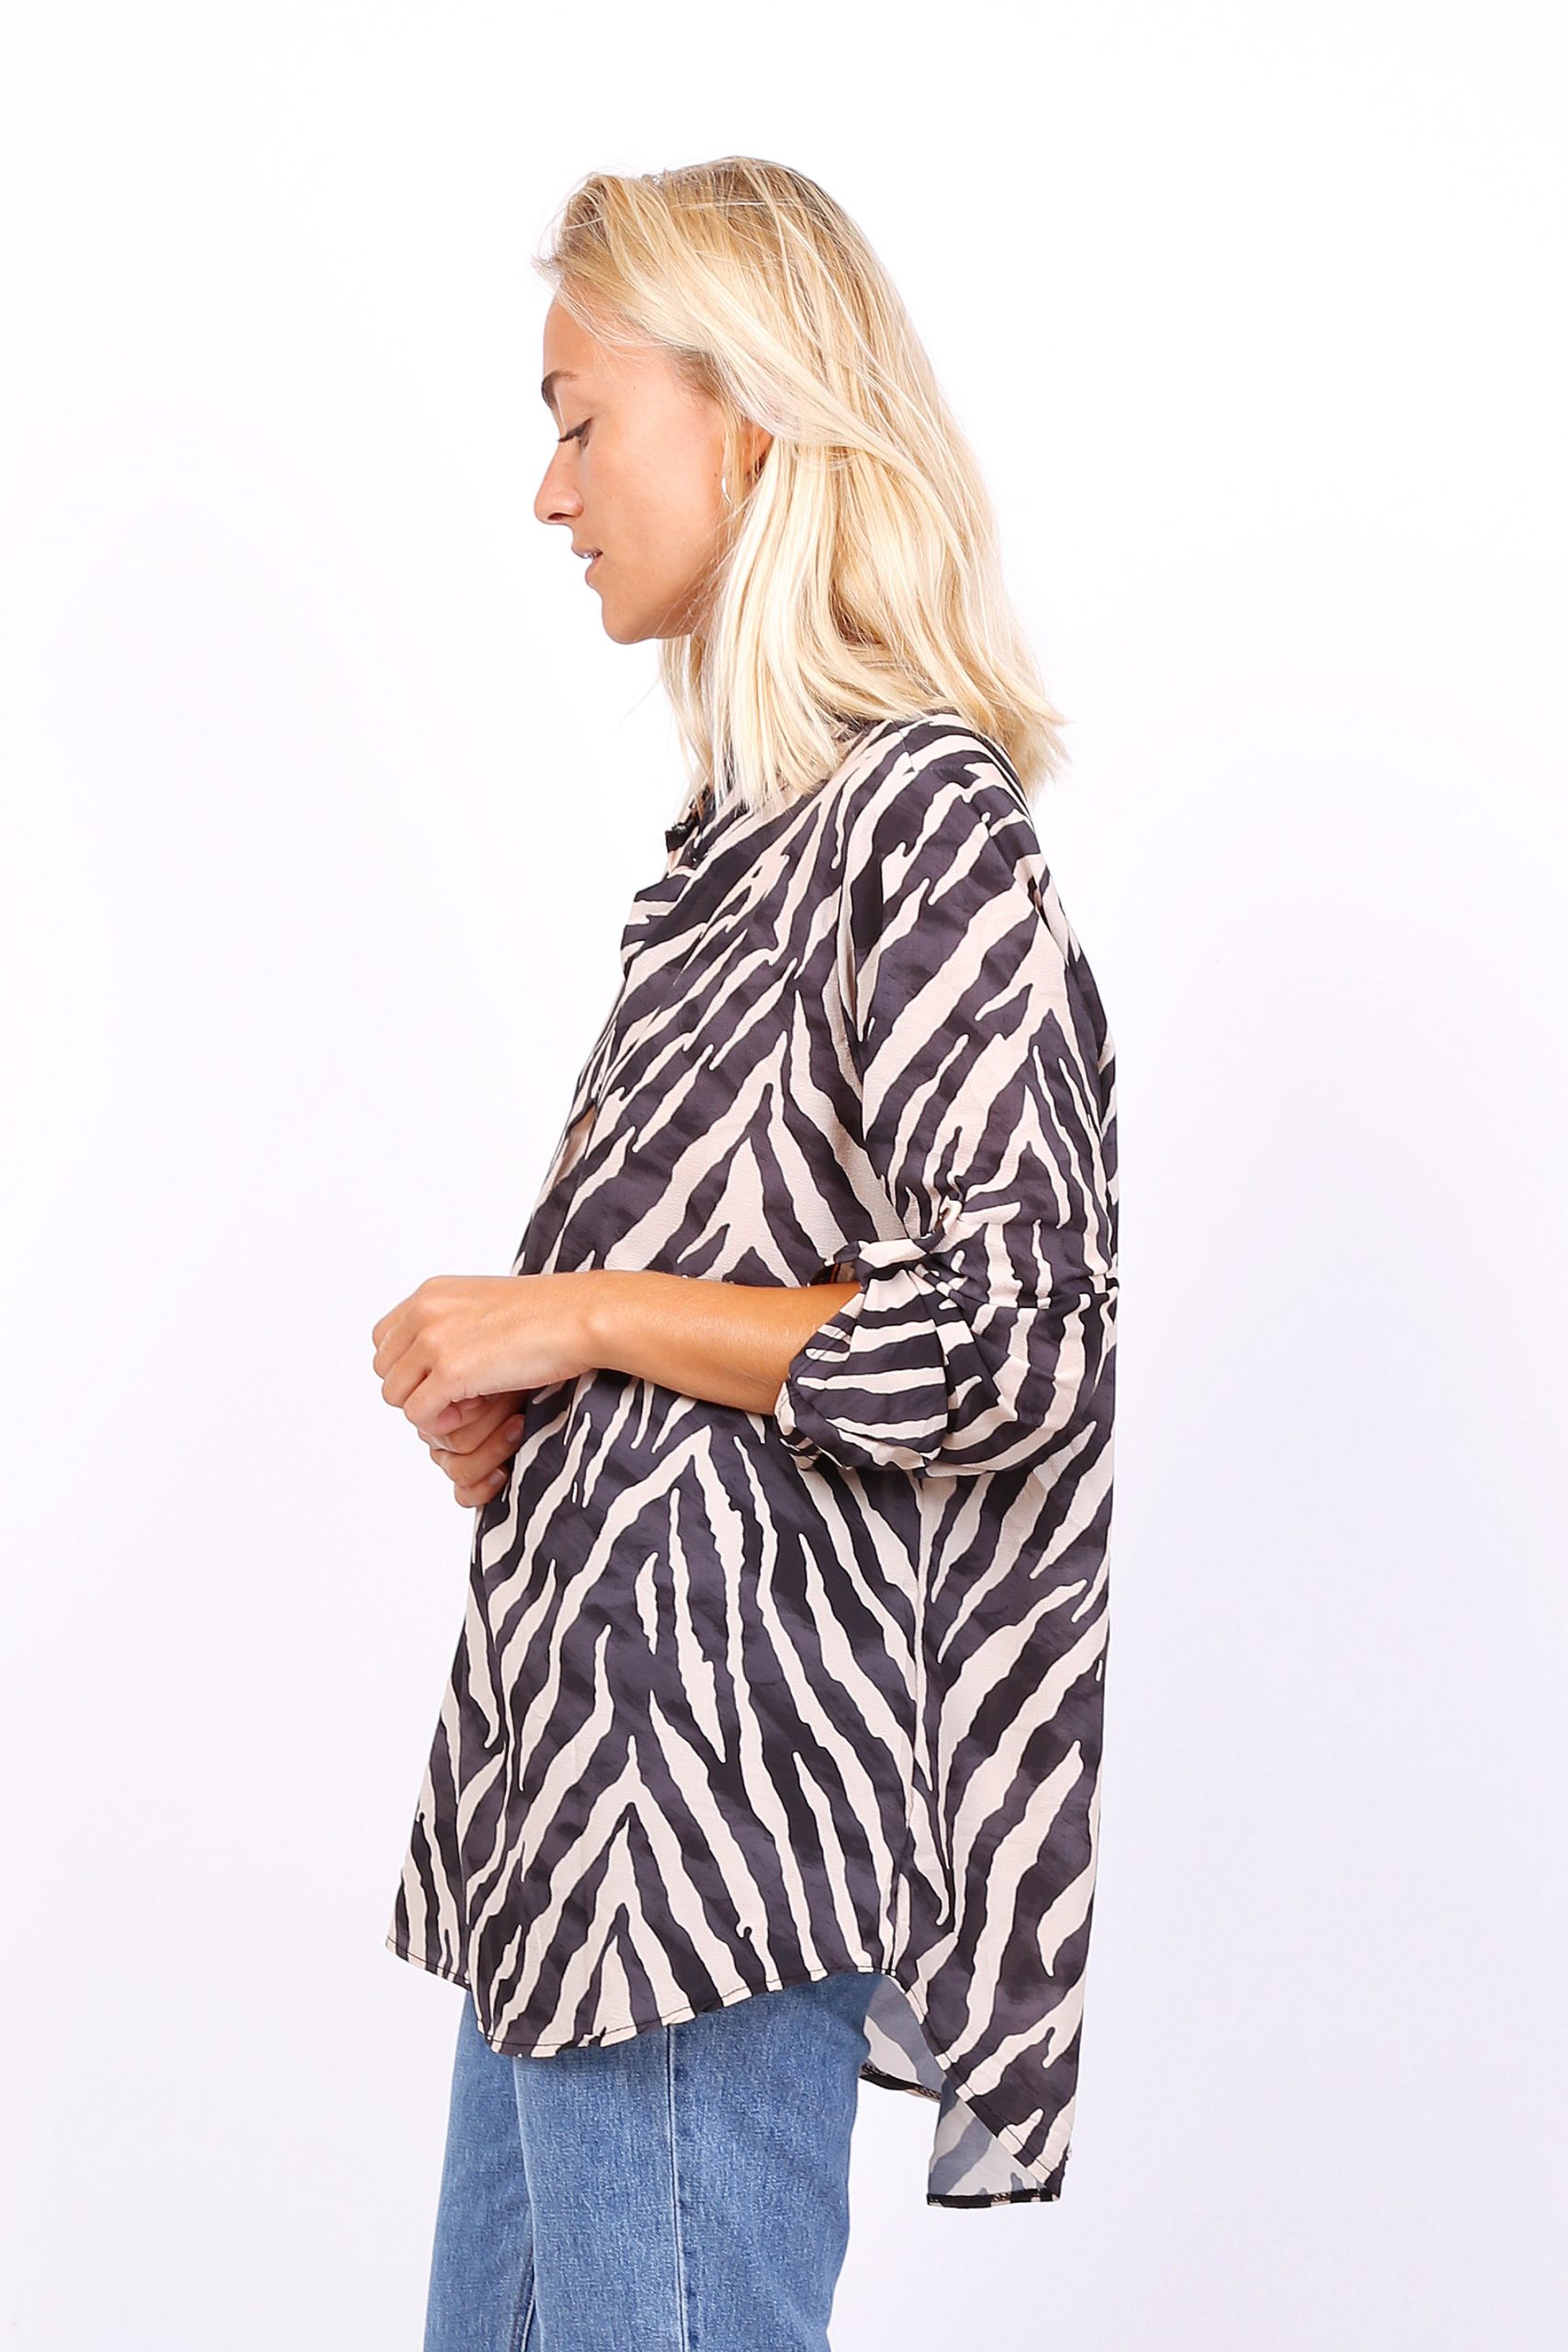 blouse-zebra